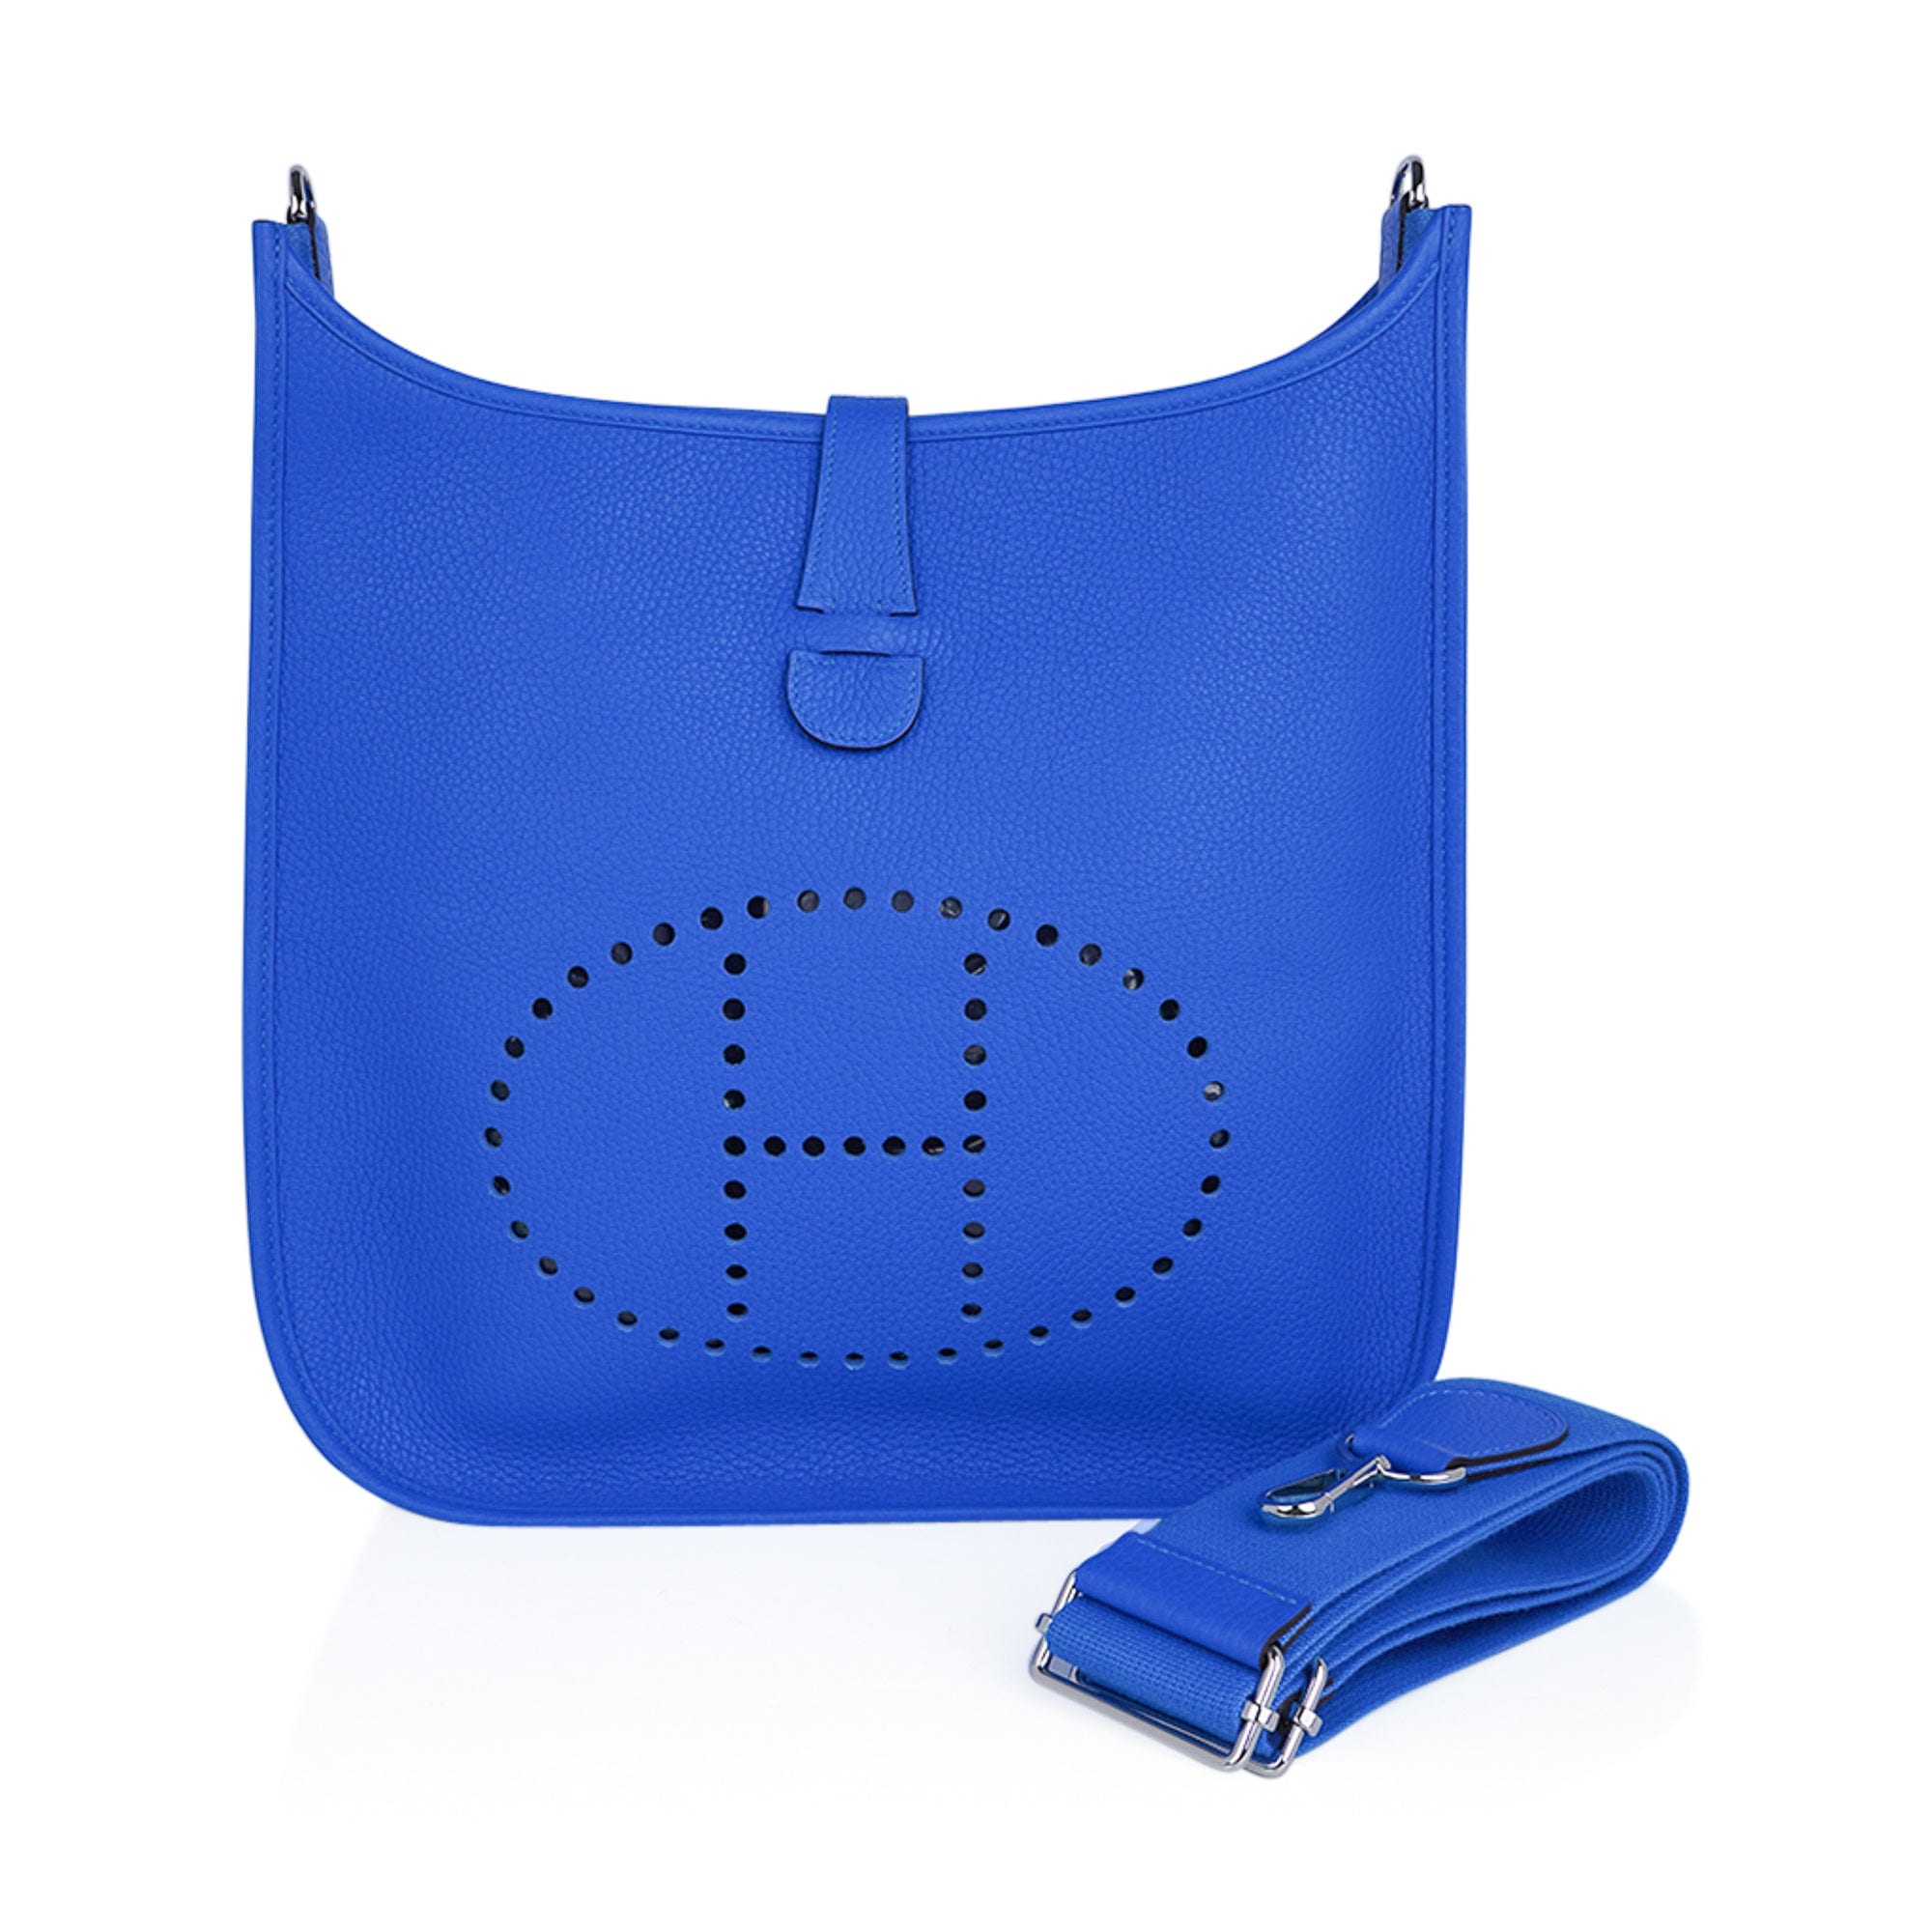 Hermes Birkin Bag, Blue Hydra, 35cm, Clemence with gold